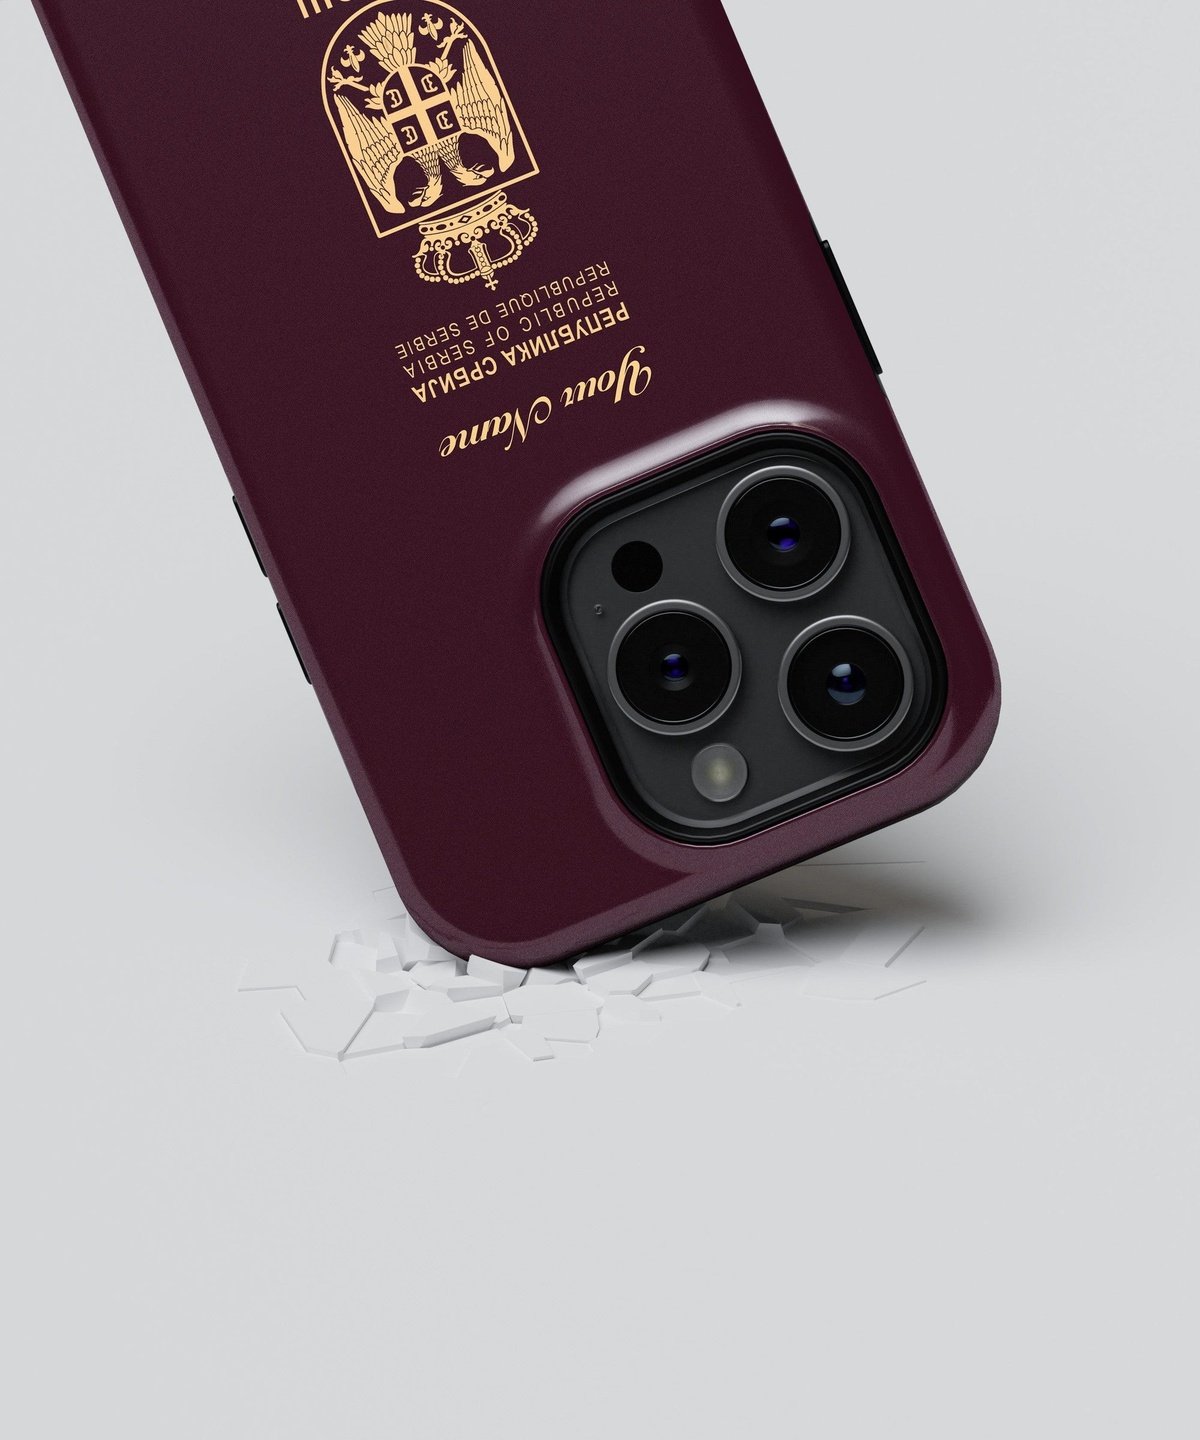 Serbia Passport - iPhone Case